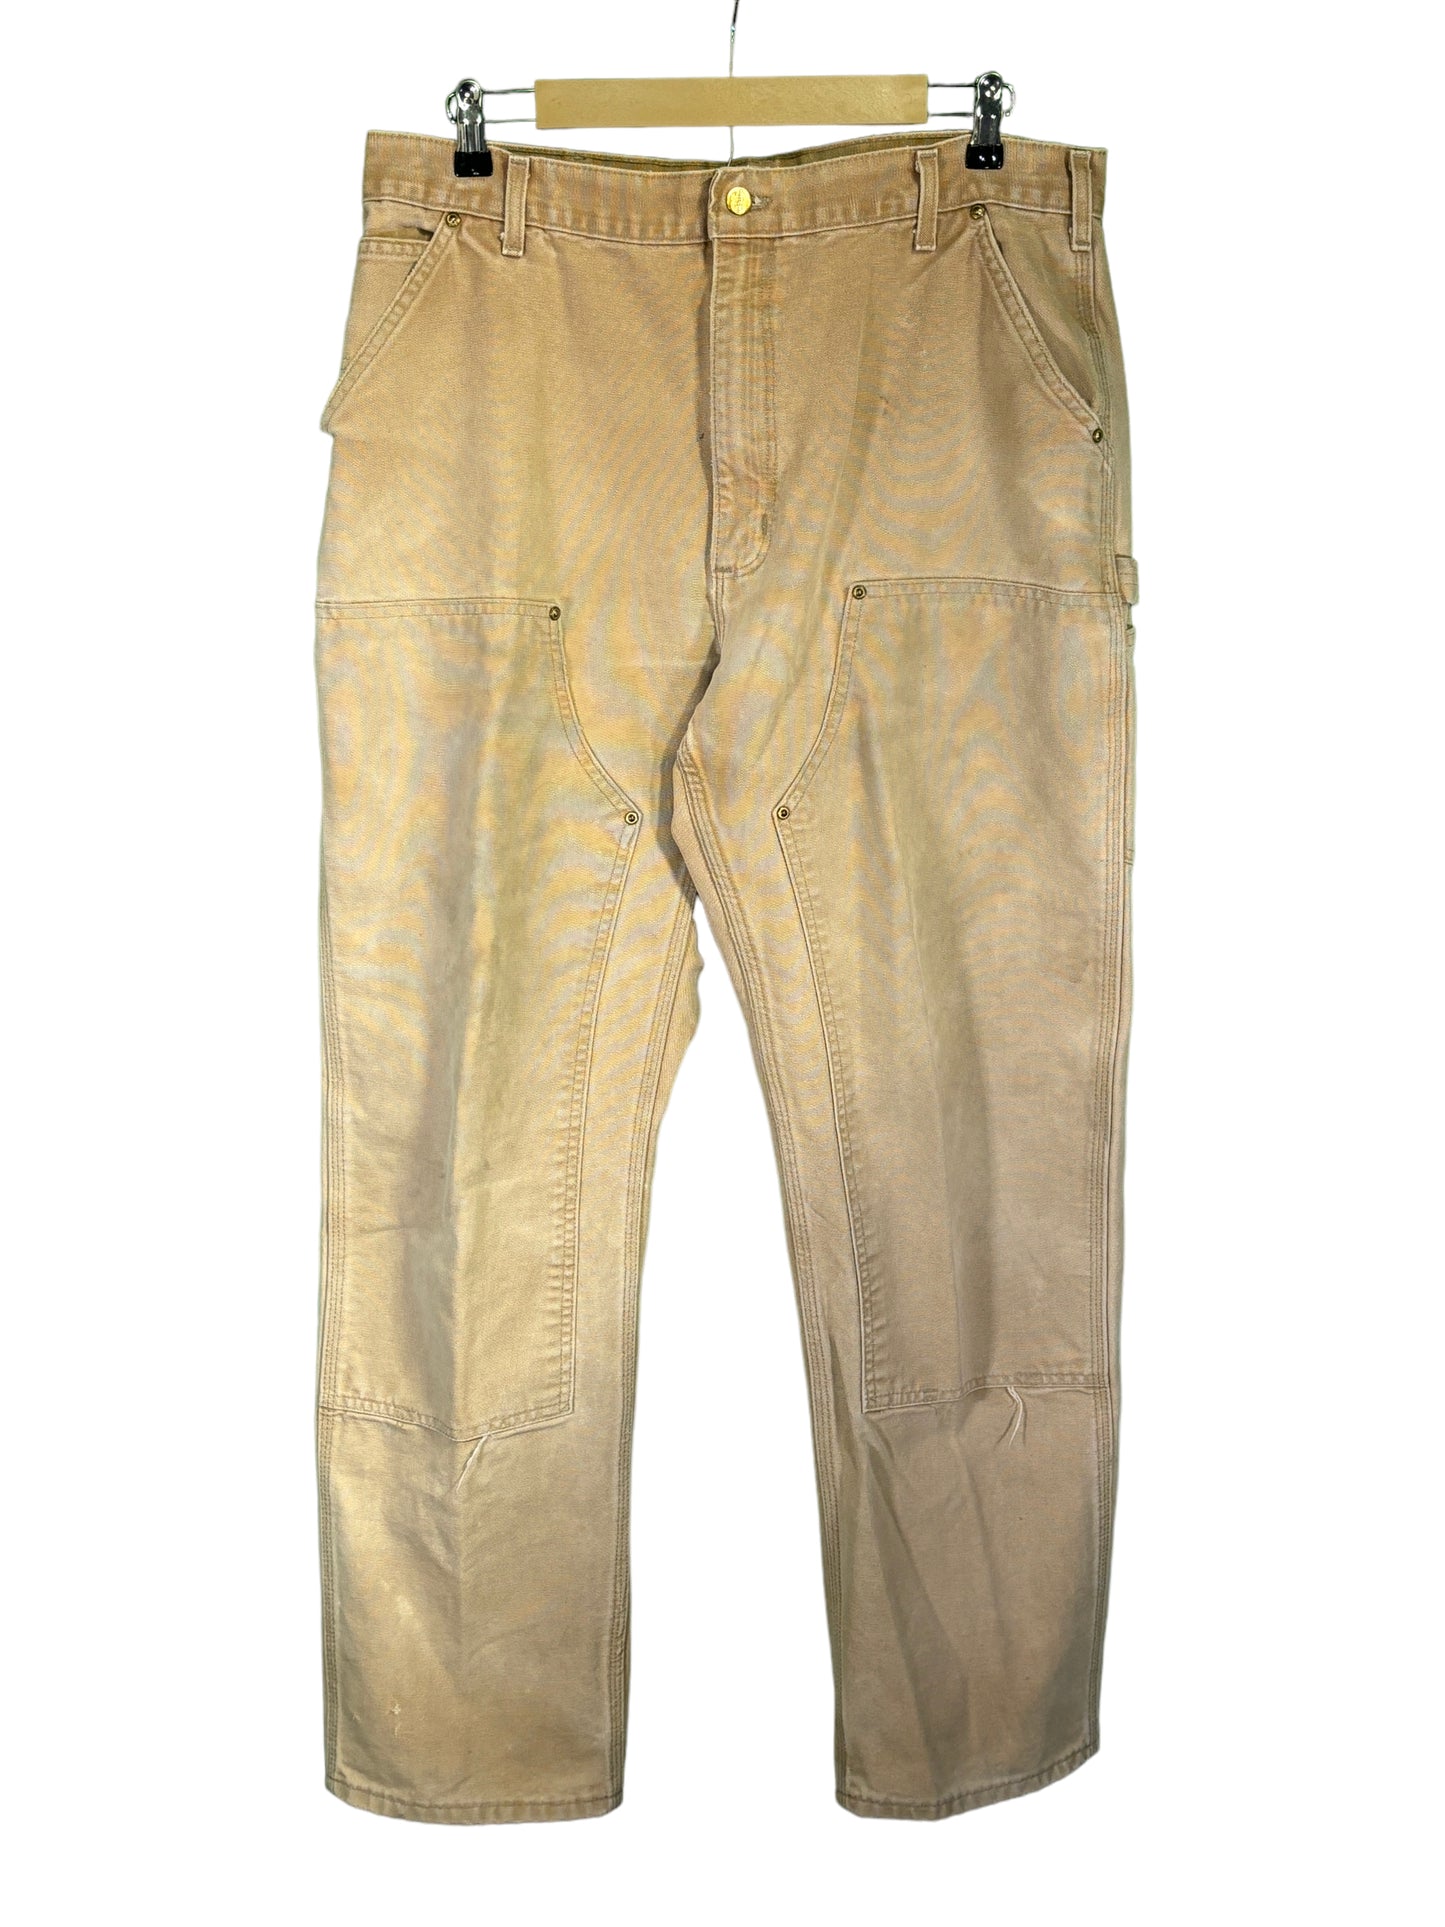 Vintage Carhartt Brown Double Knee Carpenter Pants Size 36x31